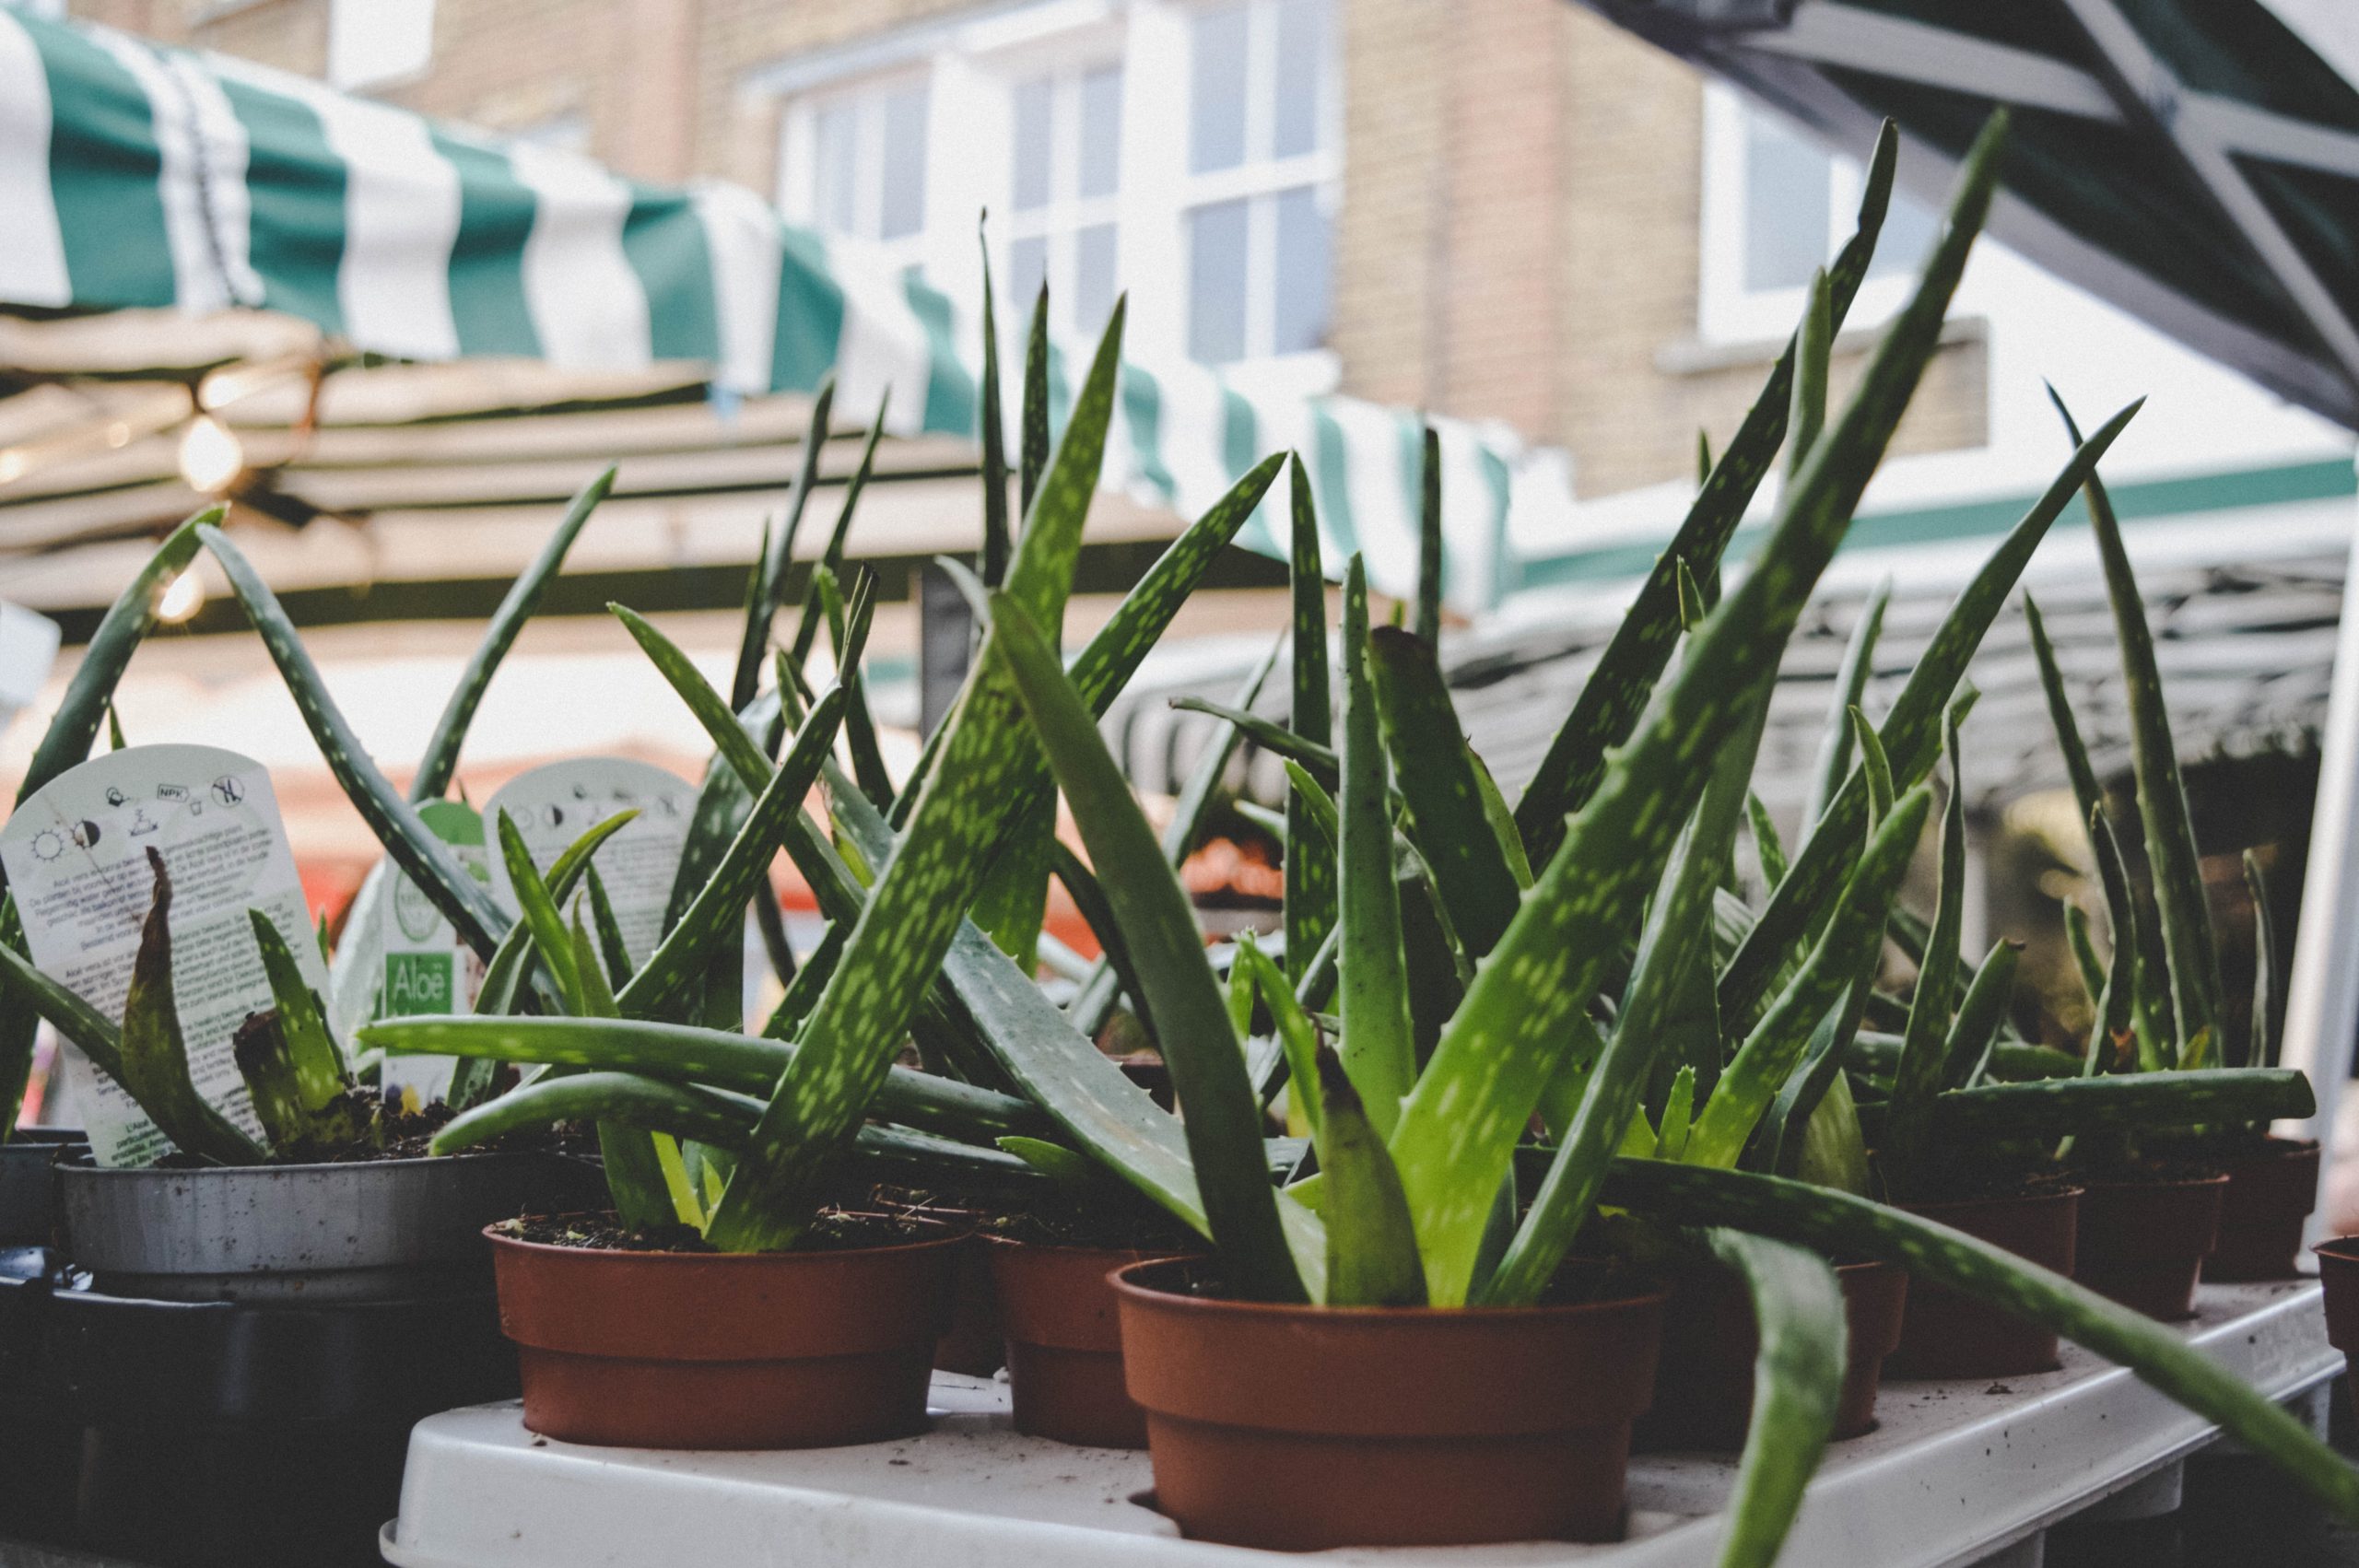 How to Propagate Aloe Vera? – Tips for Propagating and Repotting Aloe